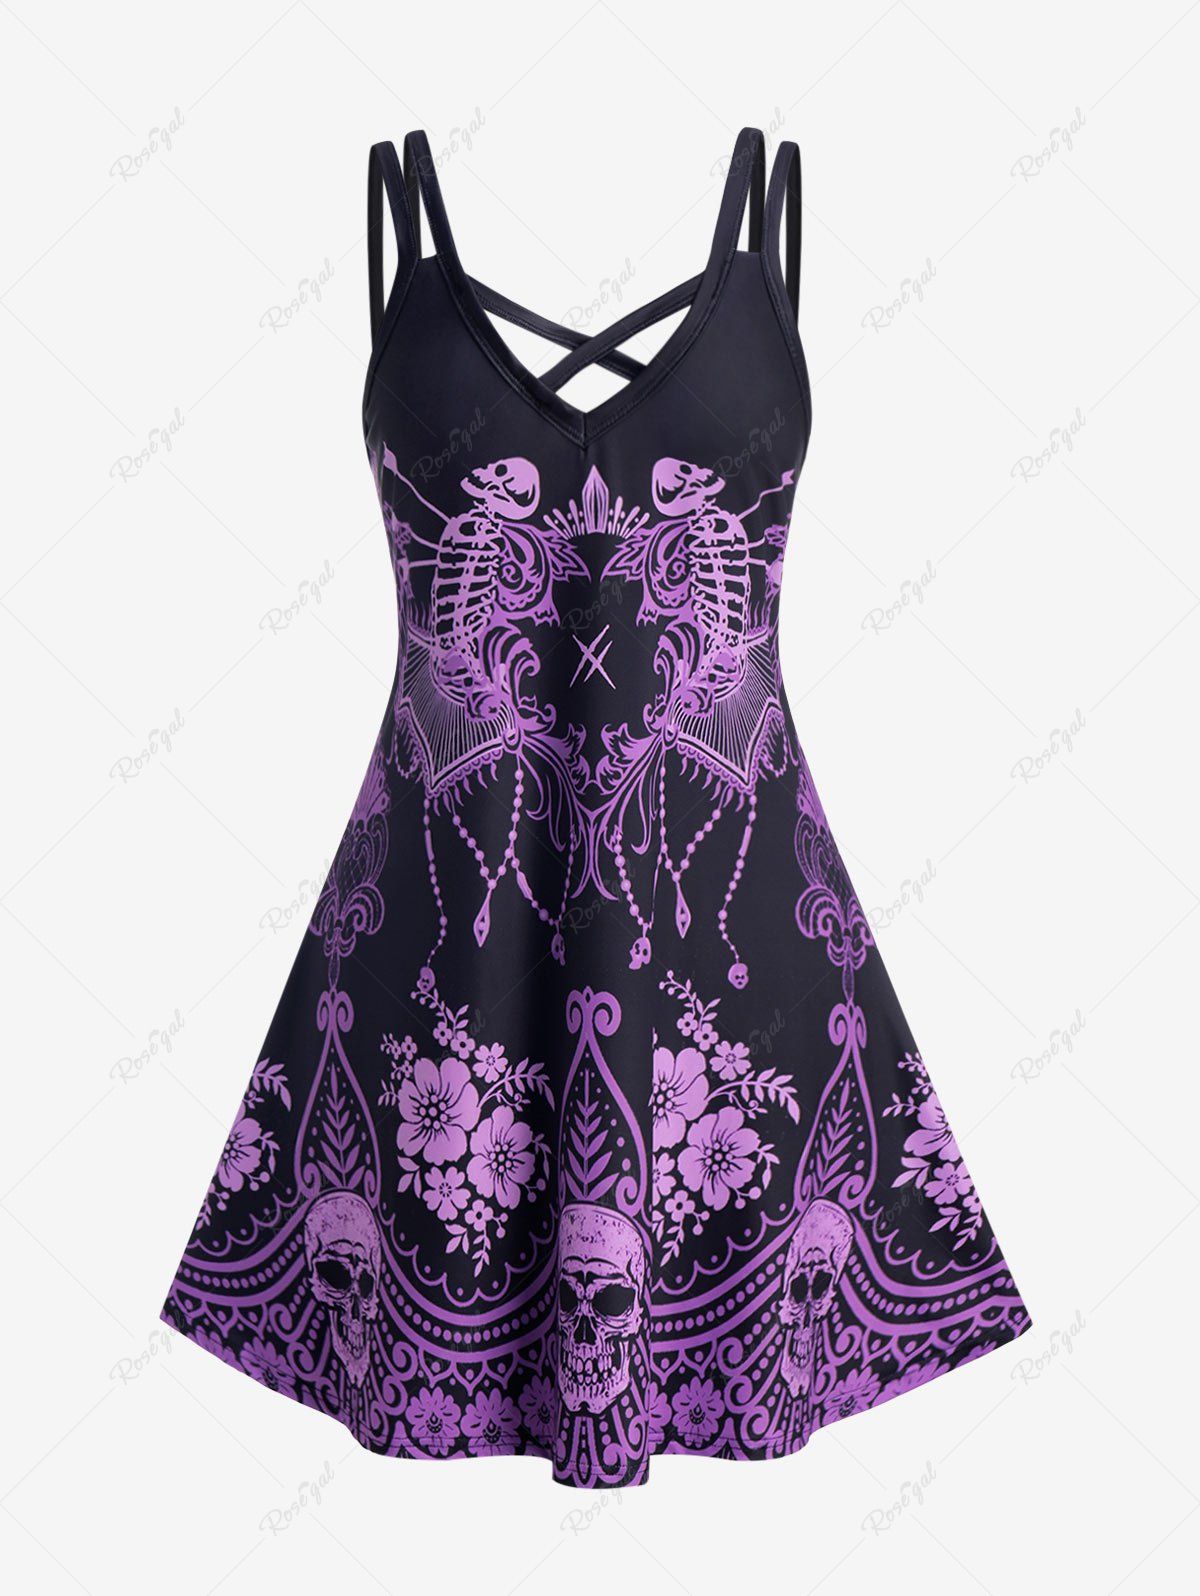 Trendy Plus Size & Curve Skeleton Skull Print Gothic Dress  